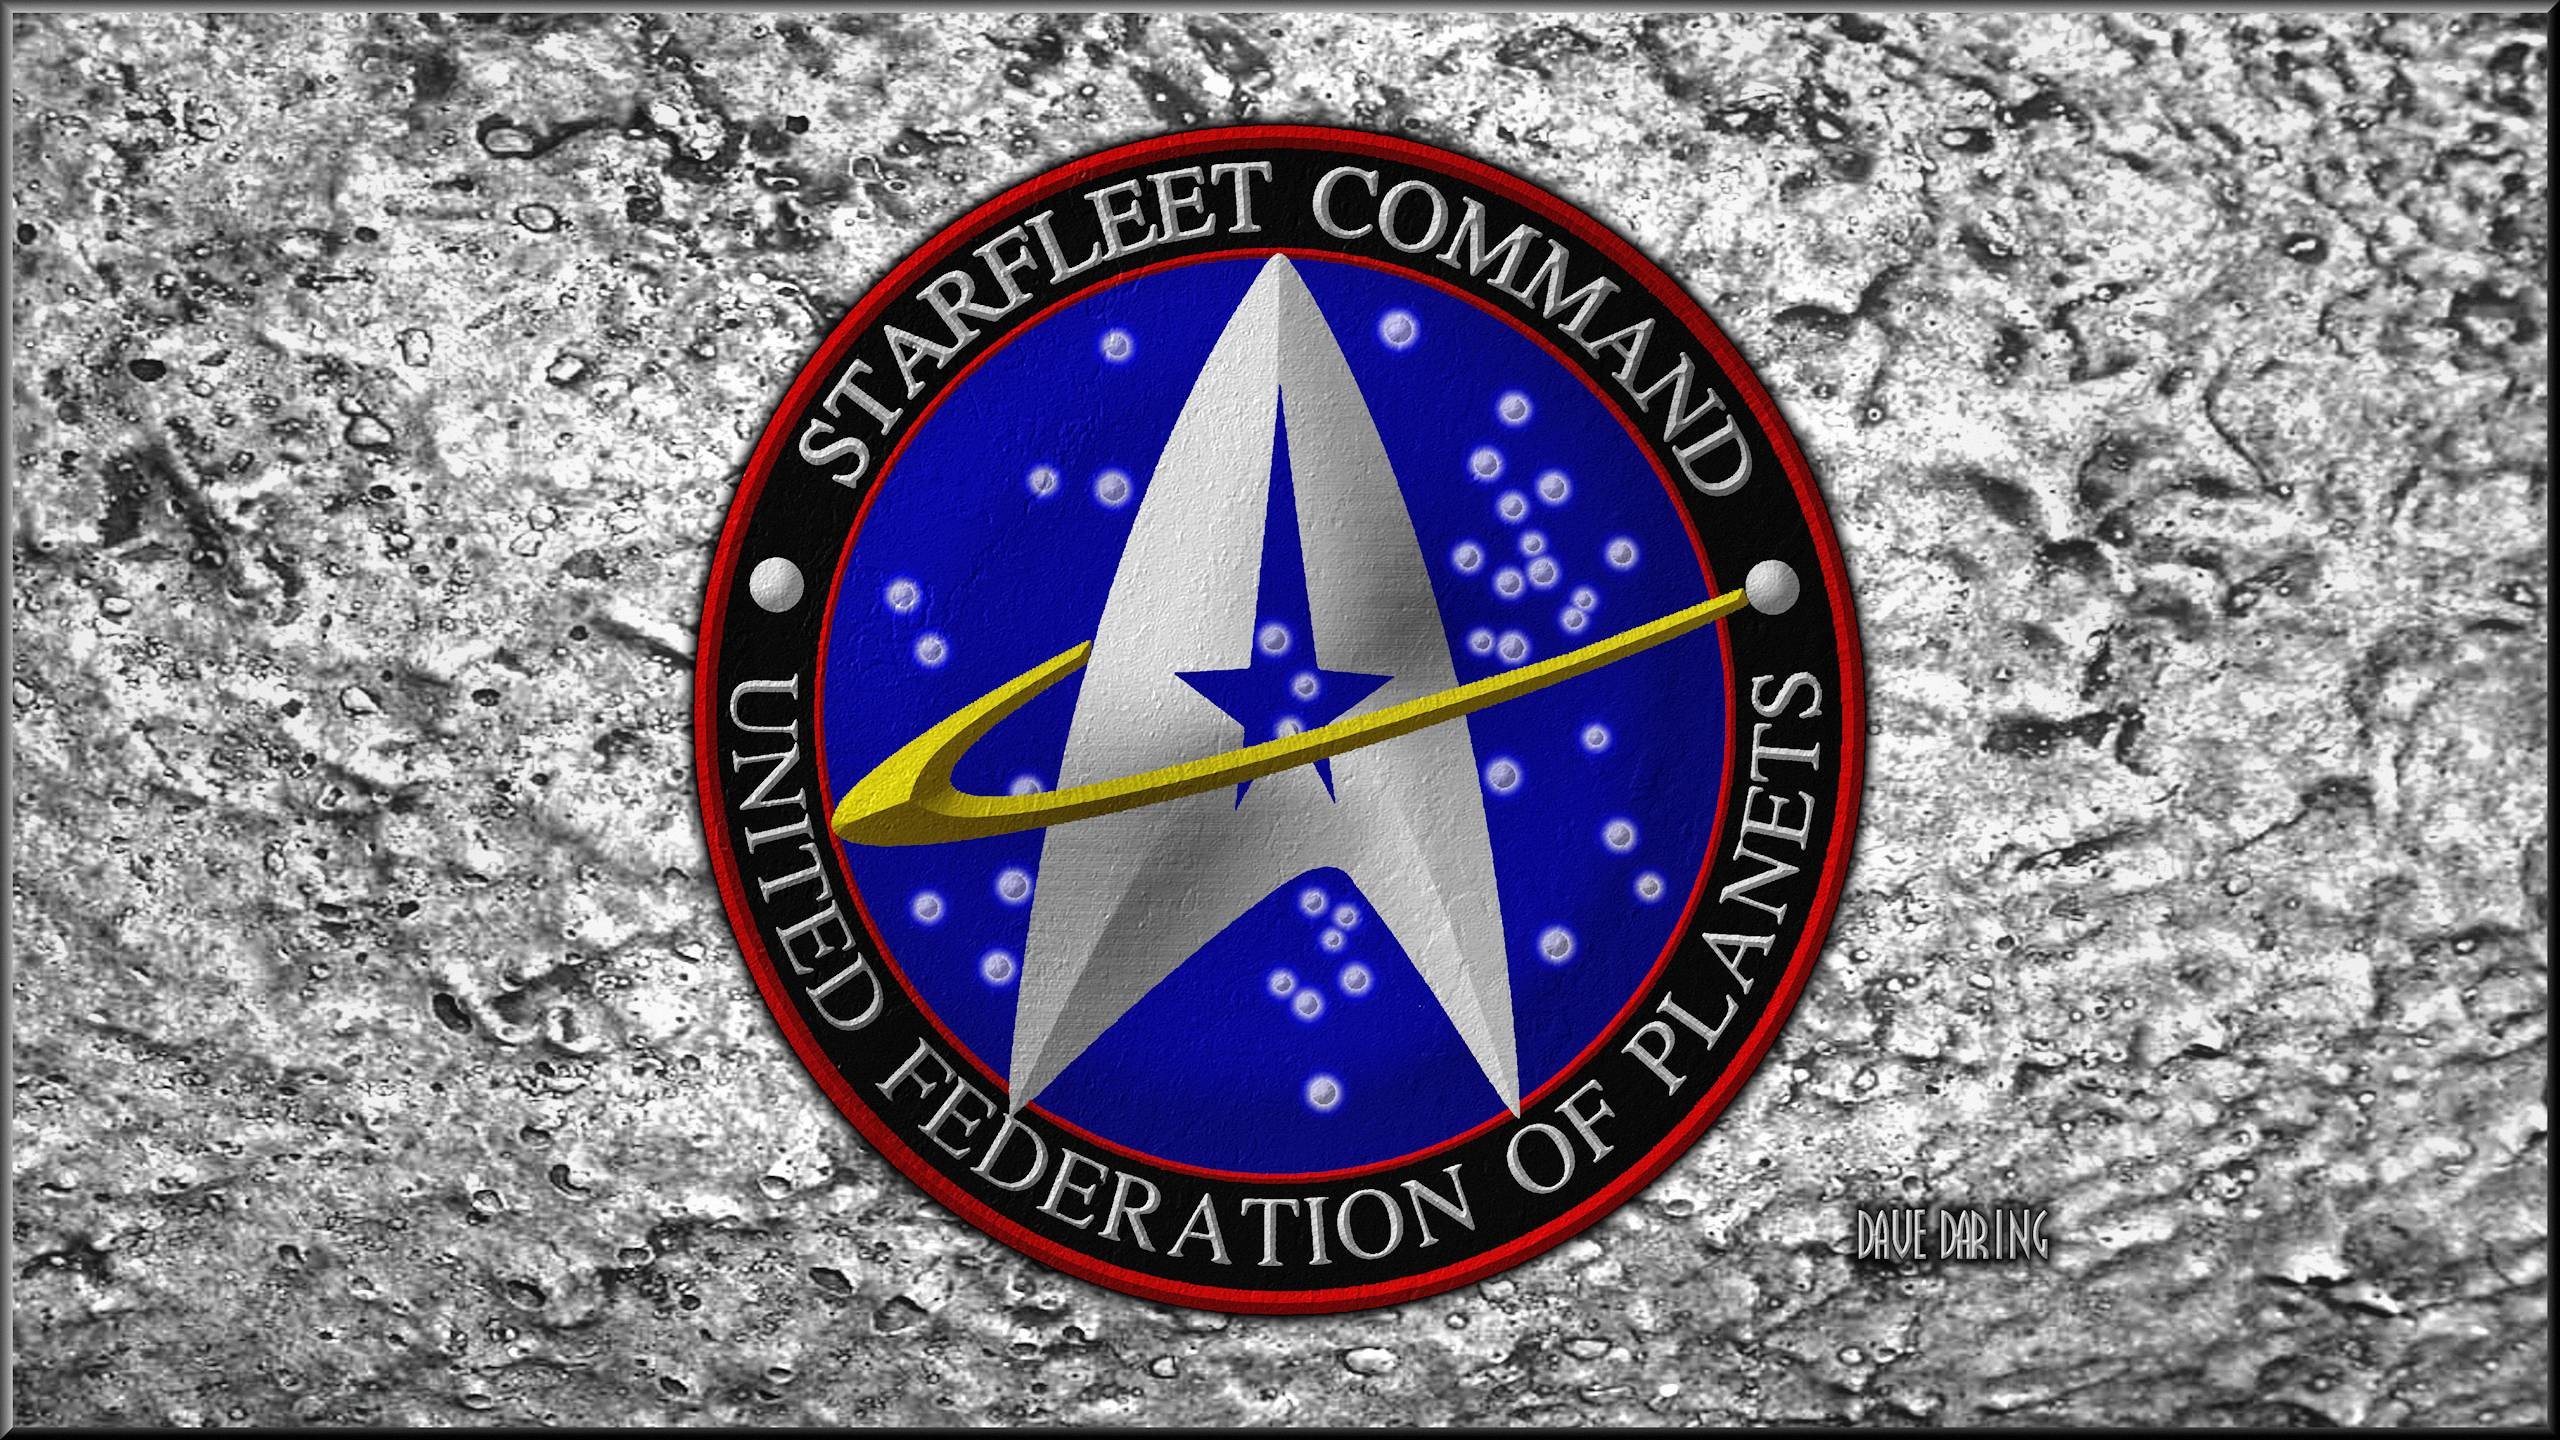 2560x1440 Star Trek Star Fleet Command Crest by Dave-Daring on .